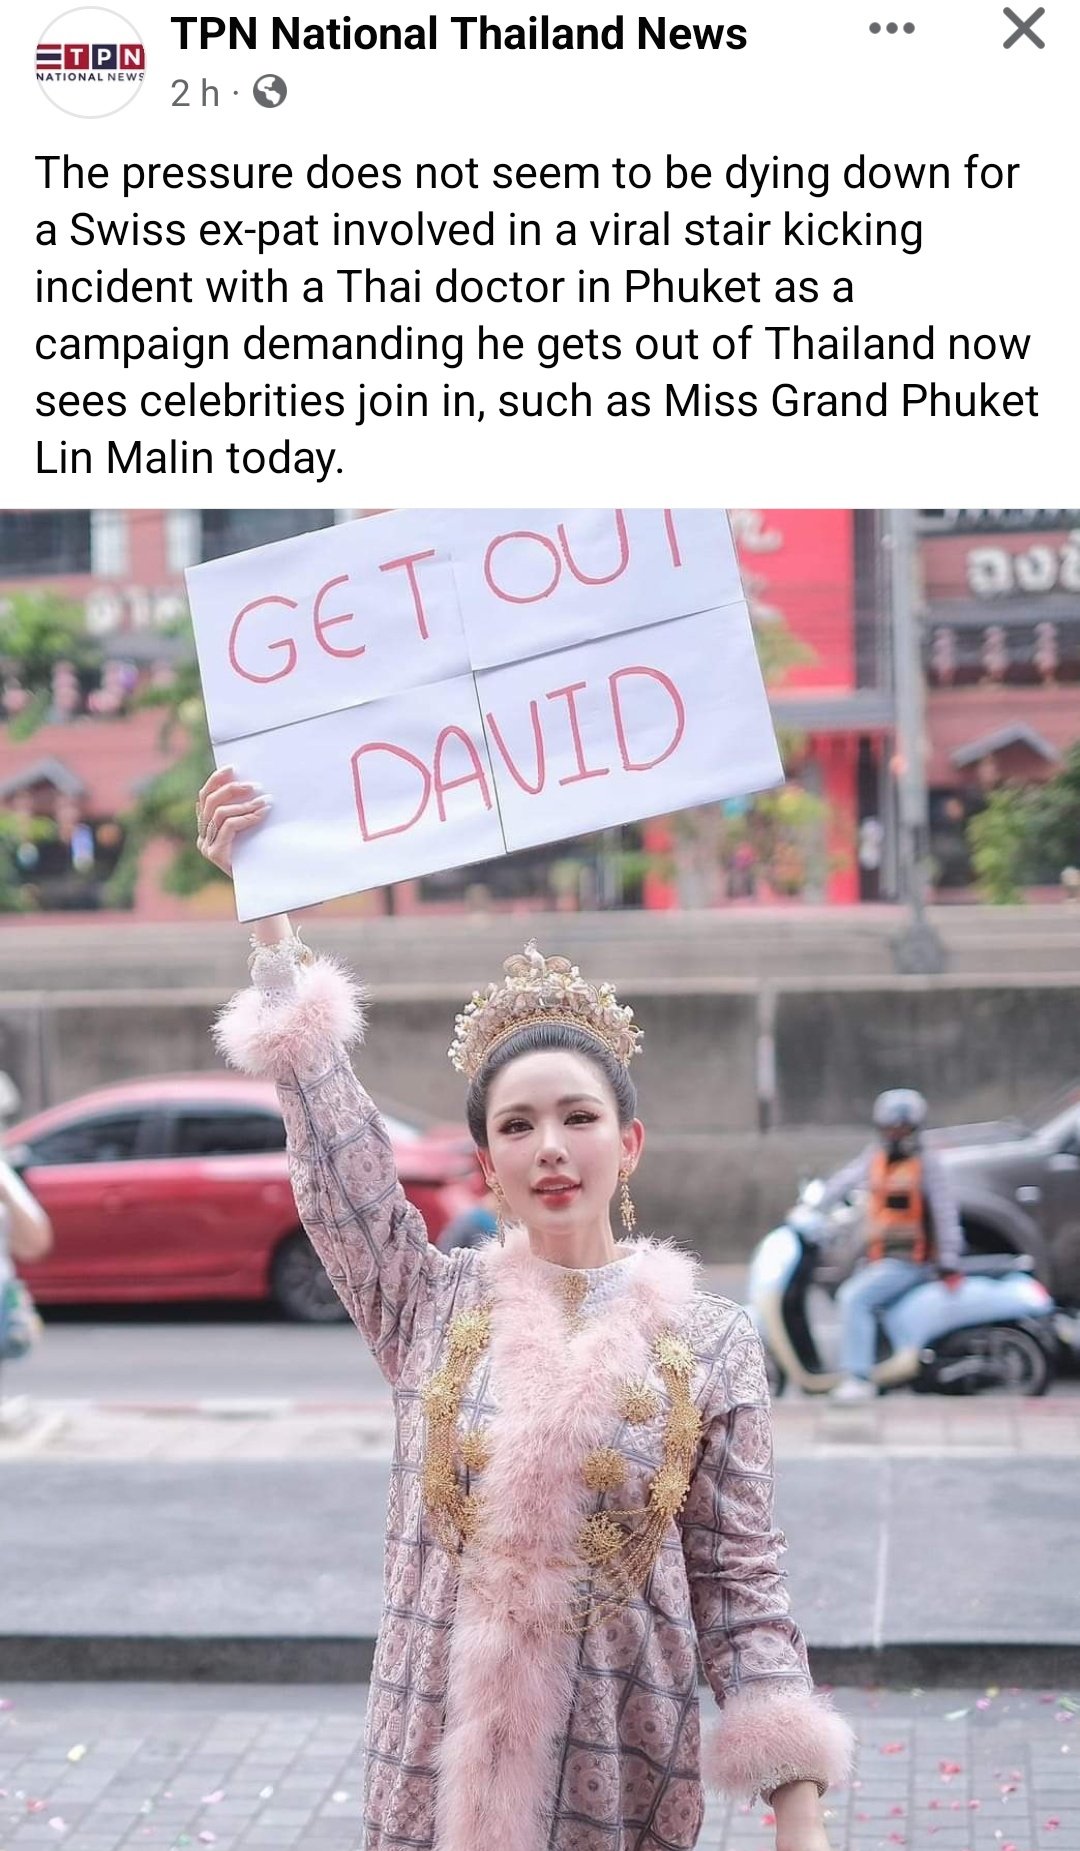 Miss Phuket Lin Malin